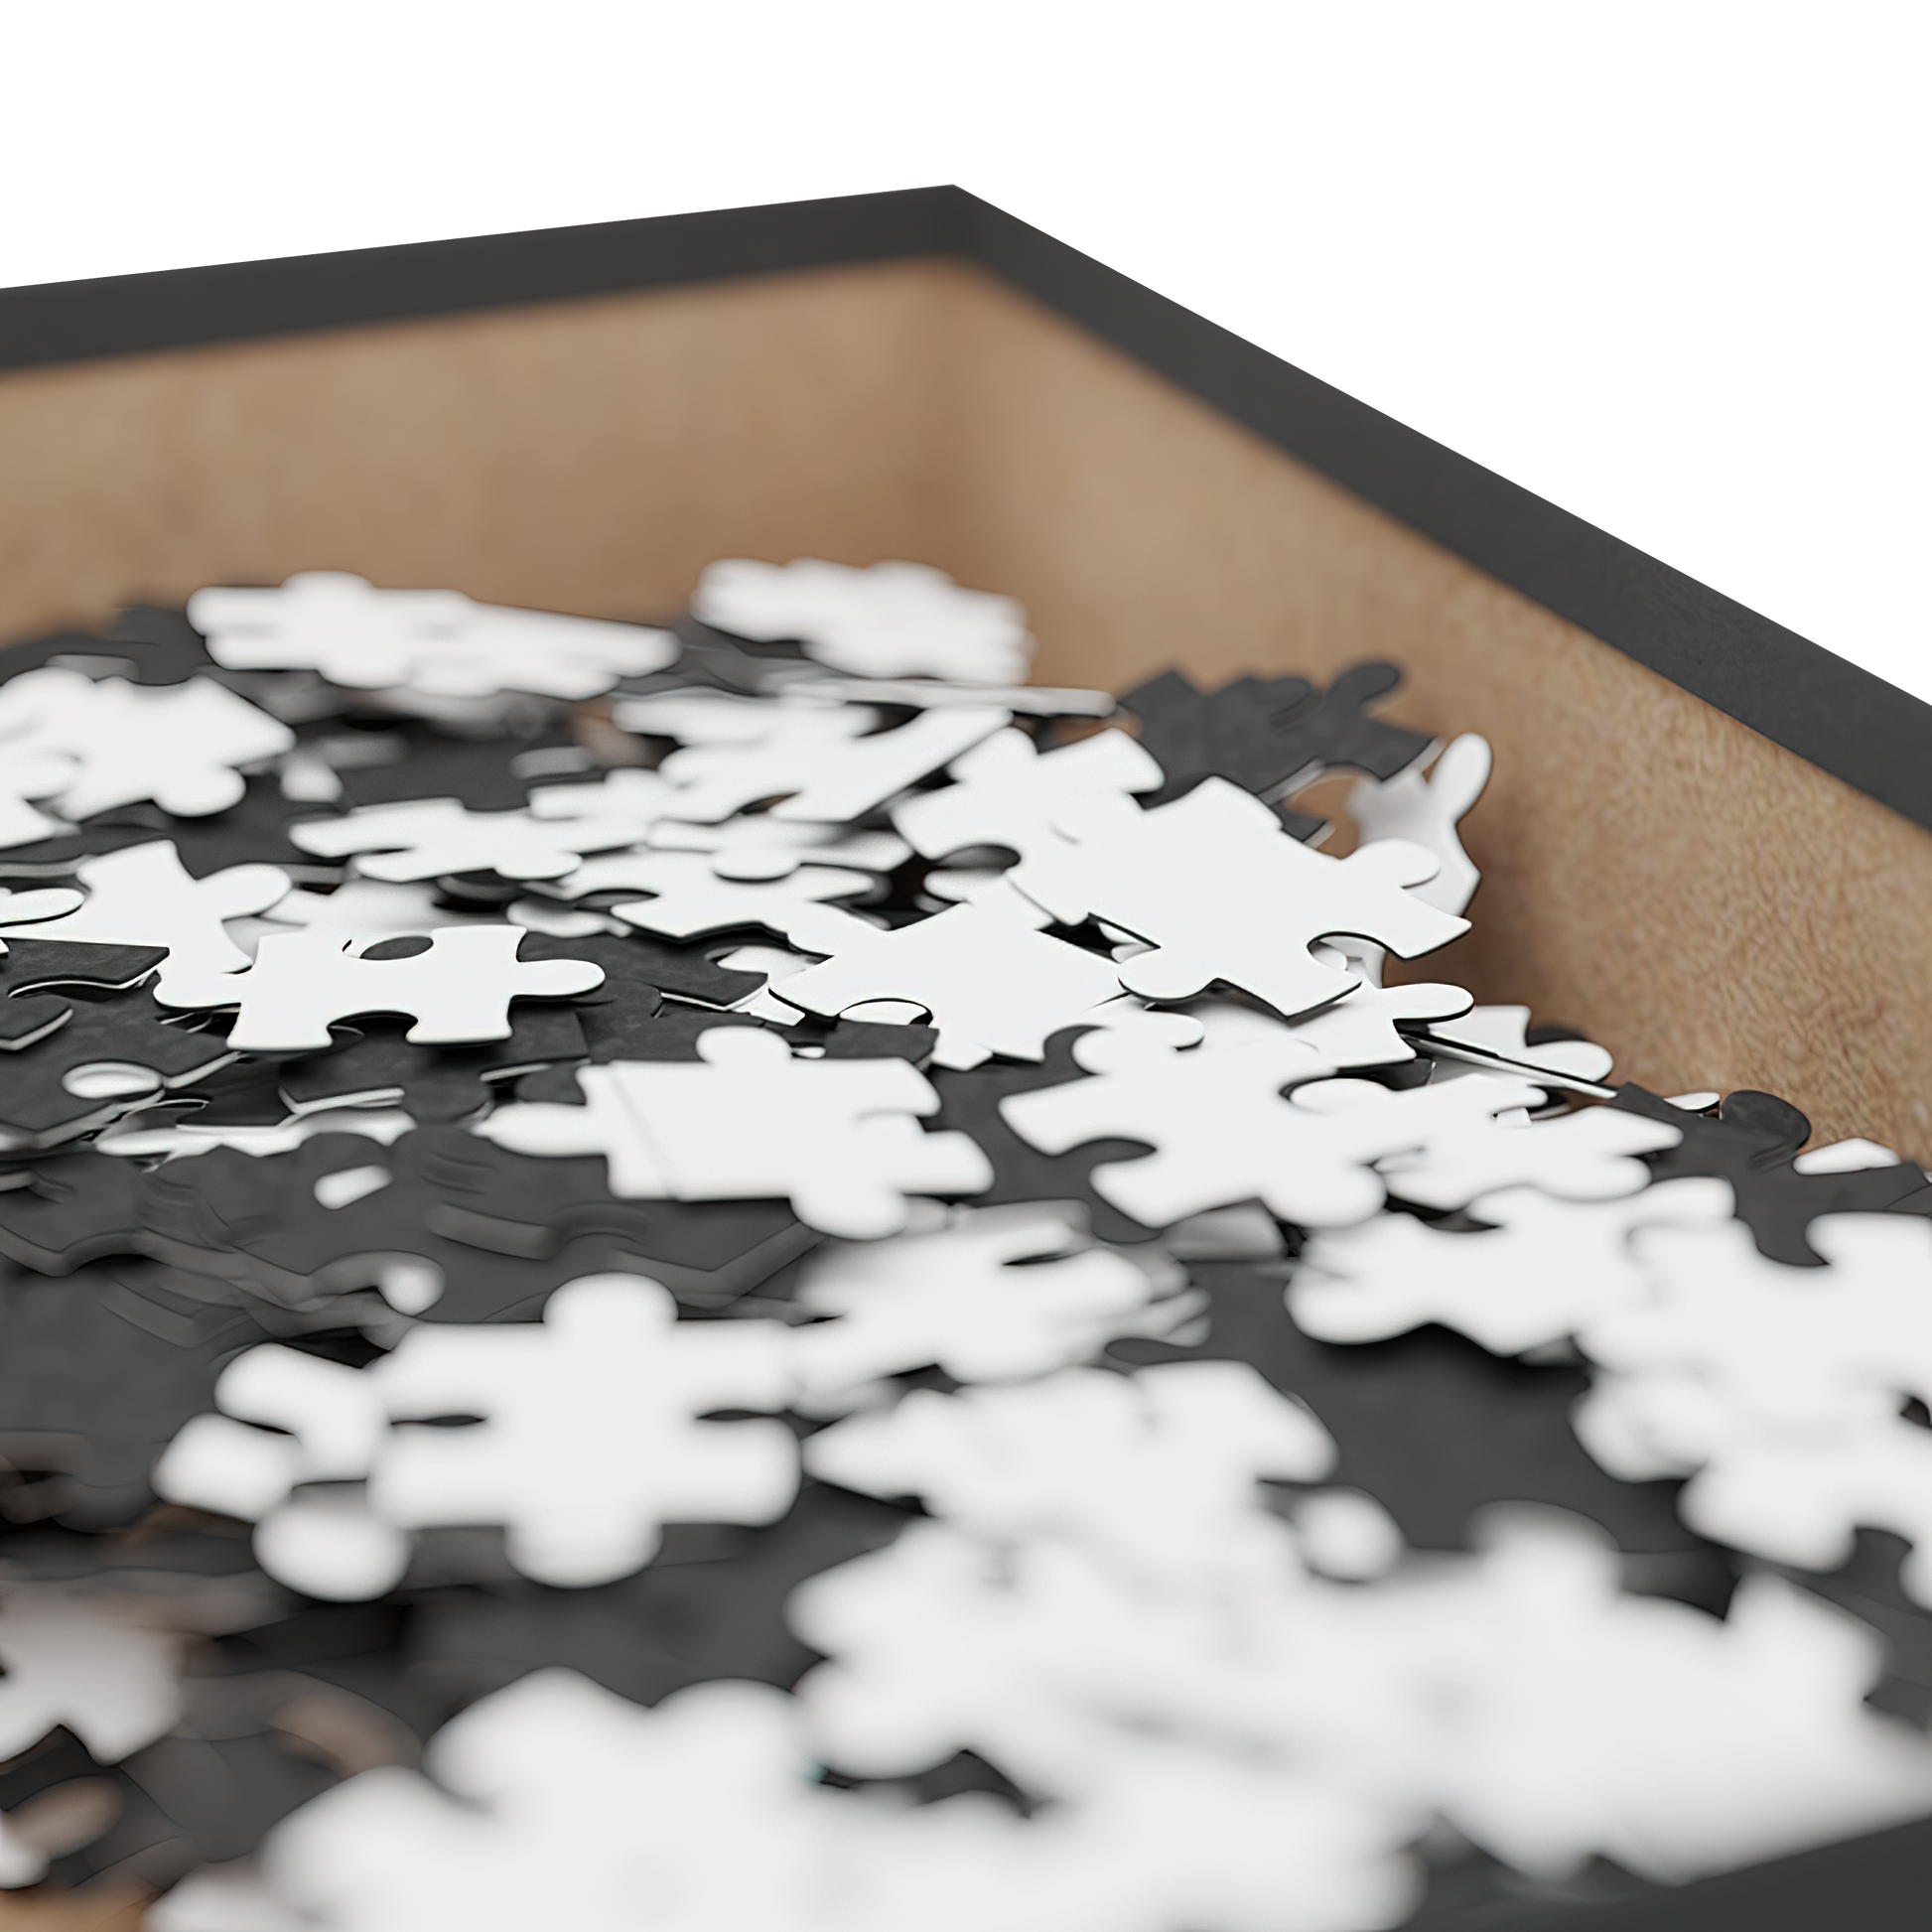 Black Sand - Premium Jigsaw Puzzle, Ornate, Detailed - Multiple Sizes Available